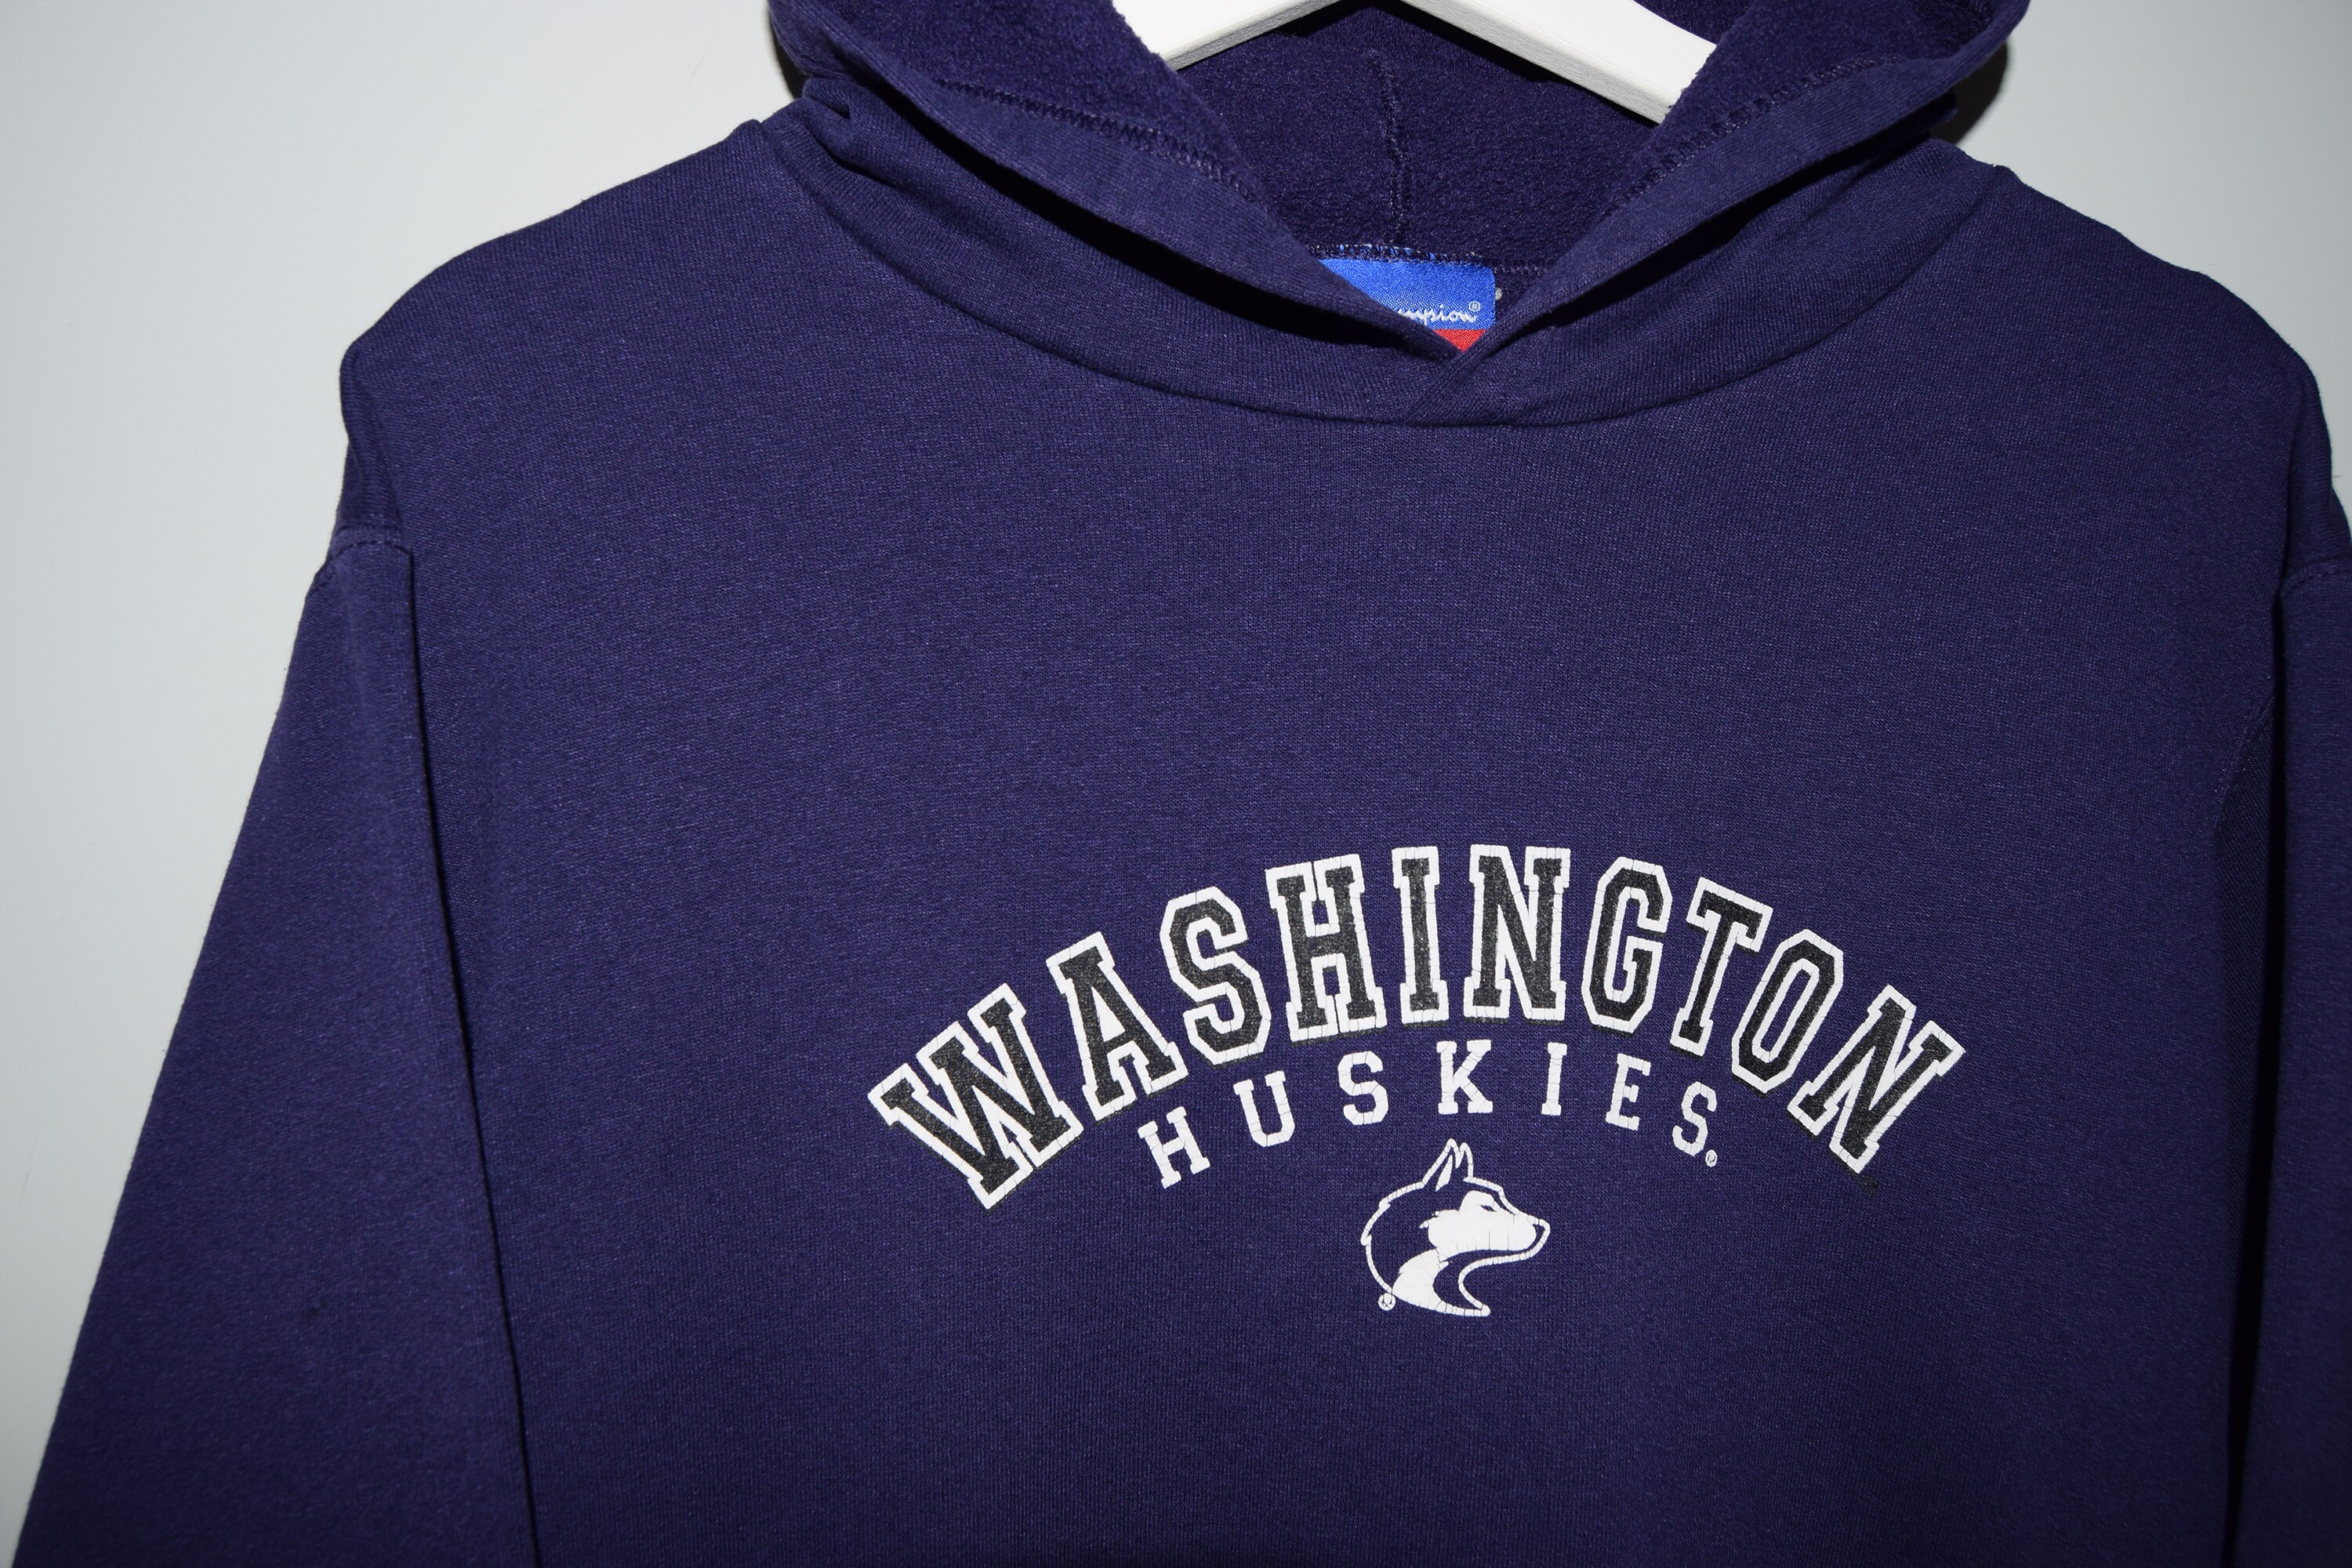 Vintage 80s Champion Washington Huskies raglan hoodie. Made in the USA.  Measures as an XS.